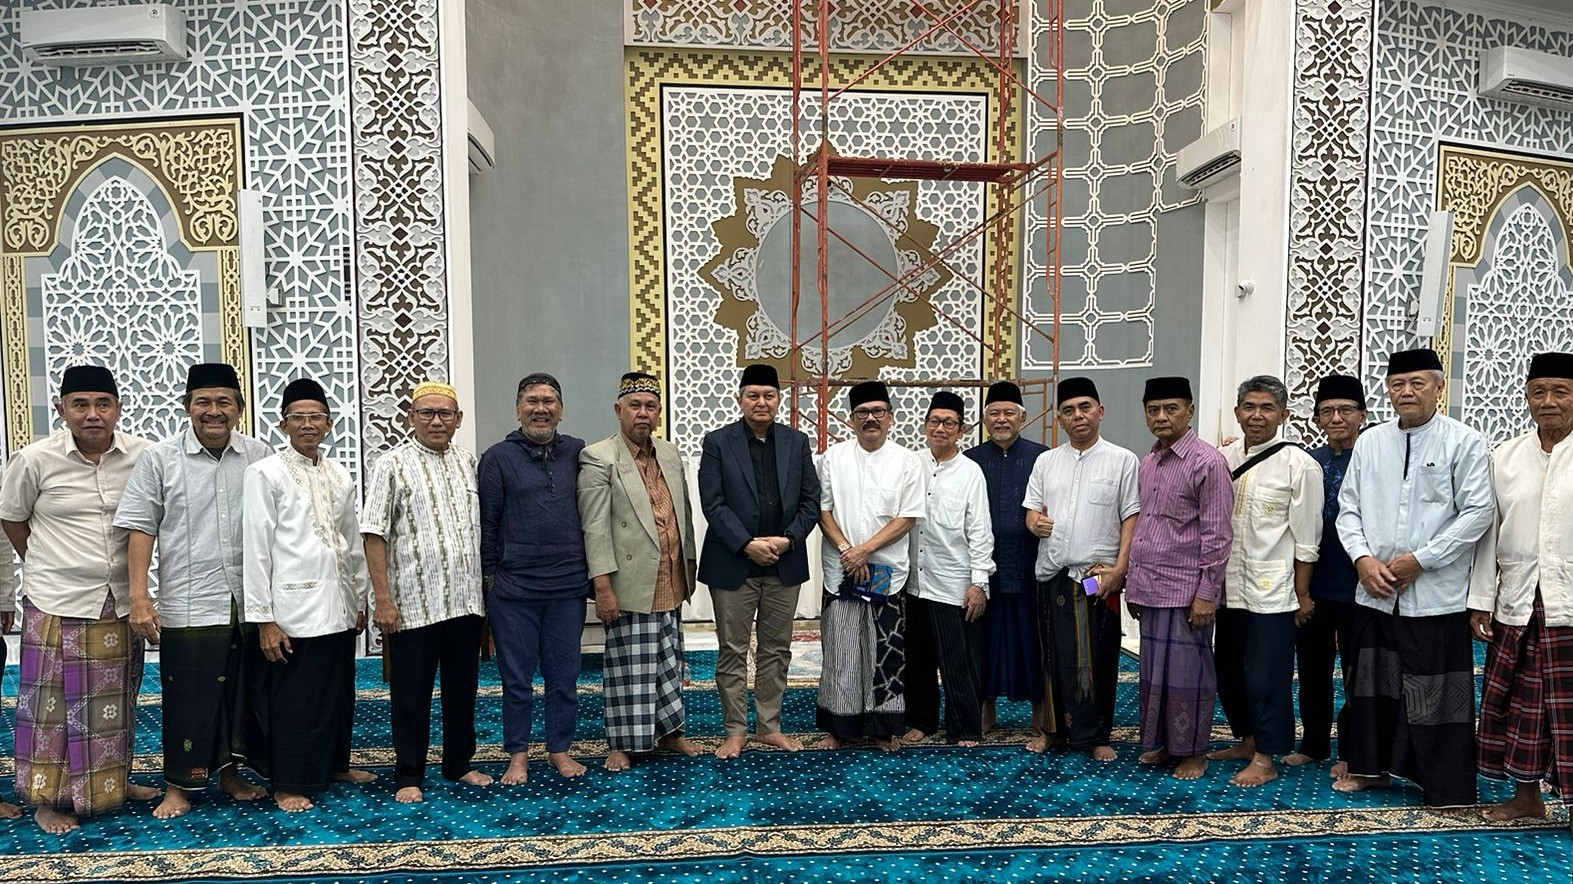 Kepala BNPT Komjen Komjen Rycko Amelza Dahniel Sabtu (8/4) malam mengangkat kisah itu dalam kuliah tujuh menit (kultum) di Masjid At Tabayyun, Taman Villa Meruya, Jakarta Barat.